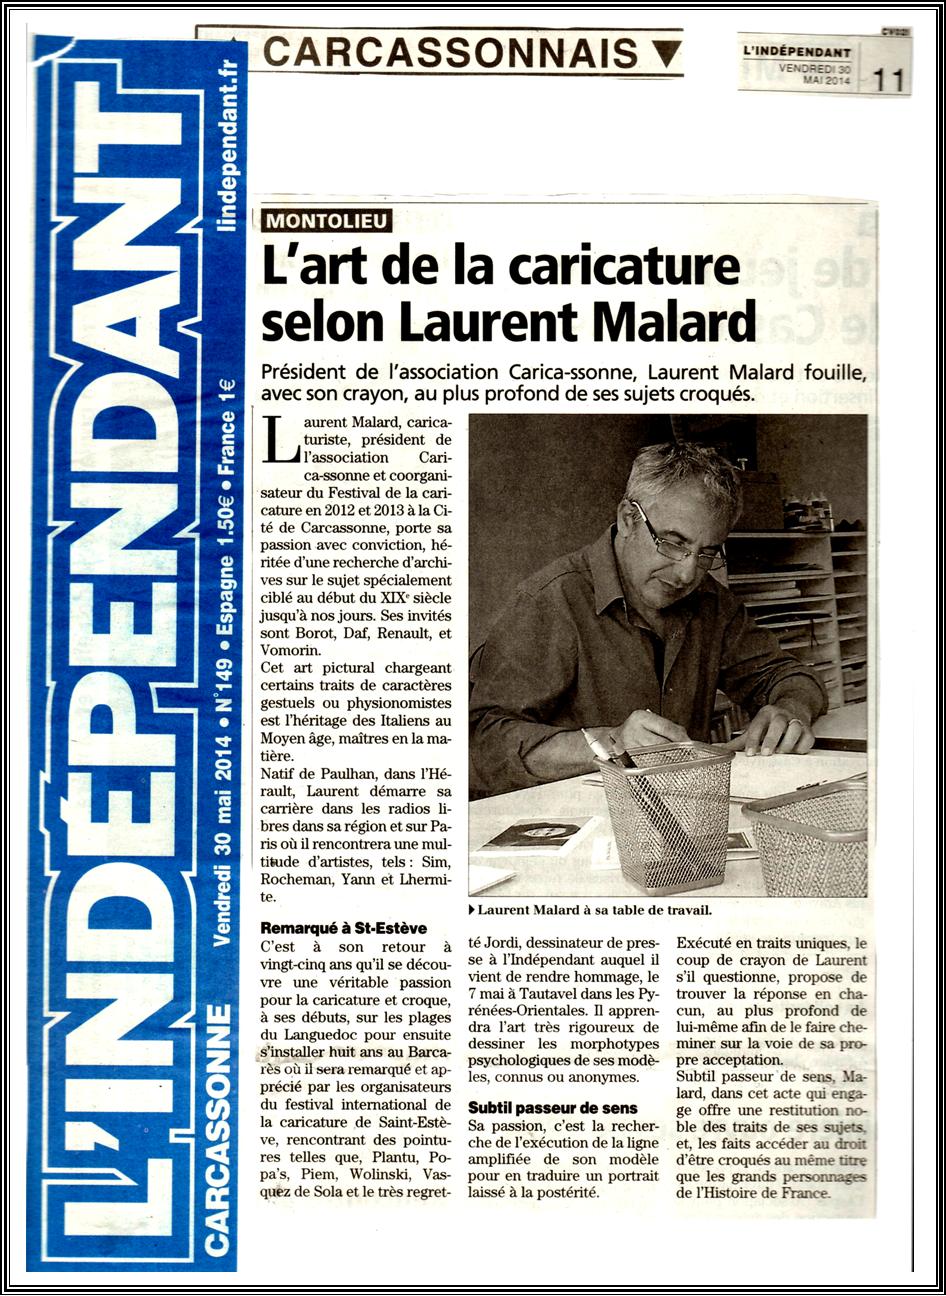  

"L'art de la caricature selon Laurent Malard" - Carole Foissier - 30/05/2014 
